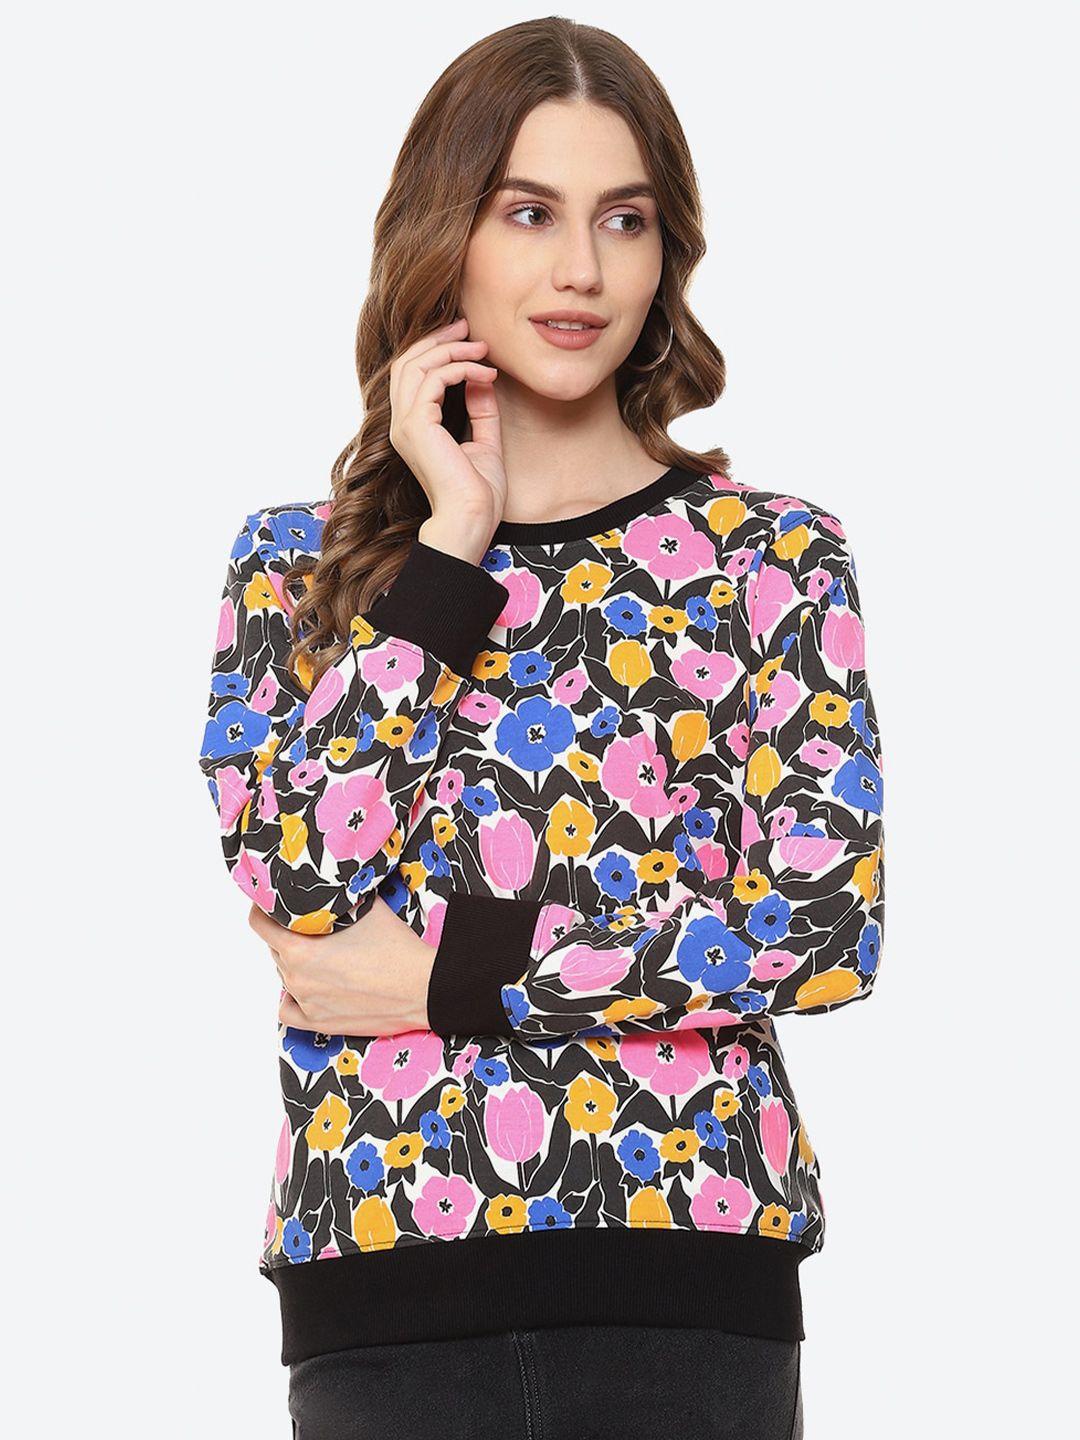 2bme floral printed cotton pullover sweatshirt